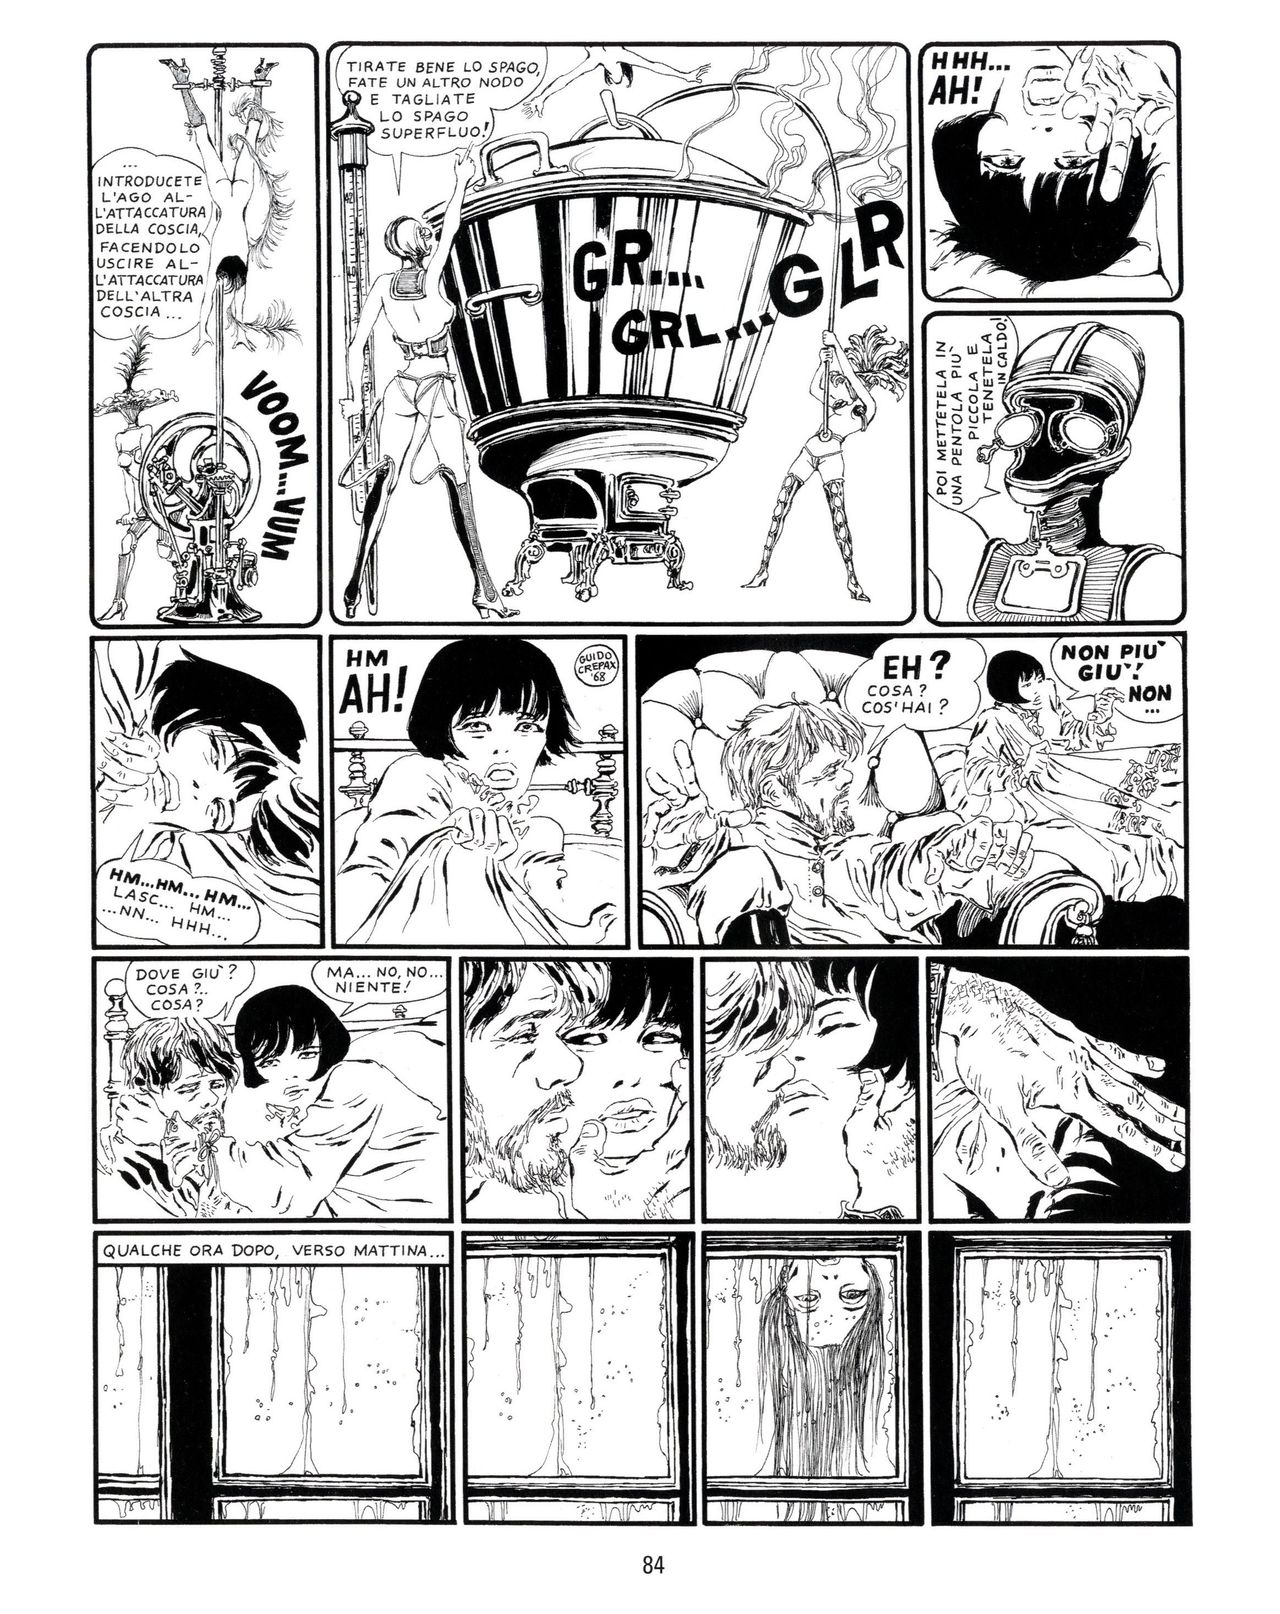 [Guido Crepax] Erotica Fumetti #25 : L'ascesa dei sotterranei : I cavalieri ciechi [Italian] 85